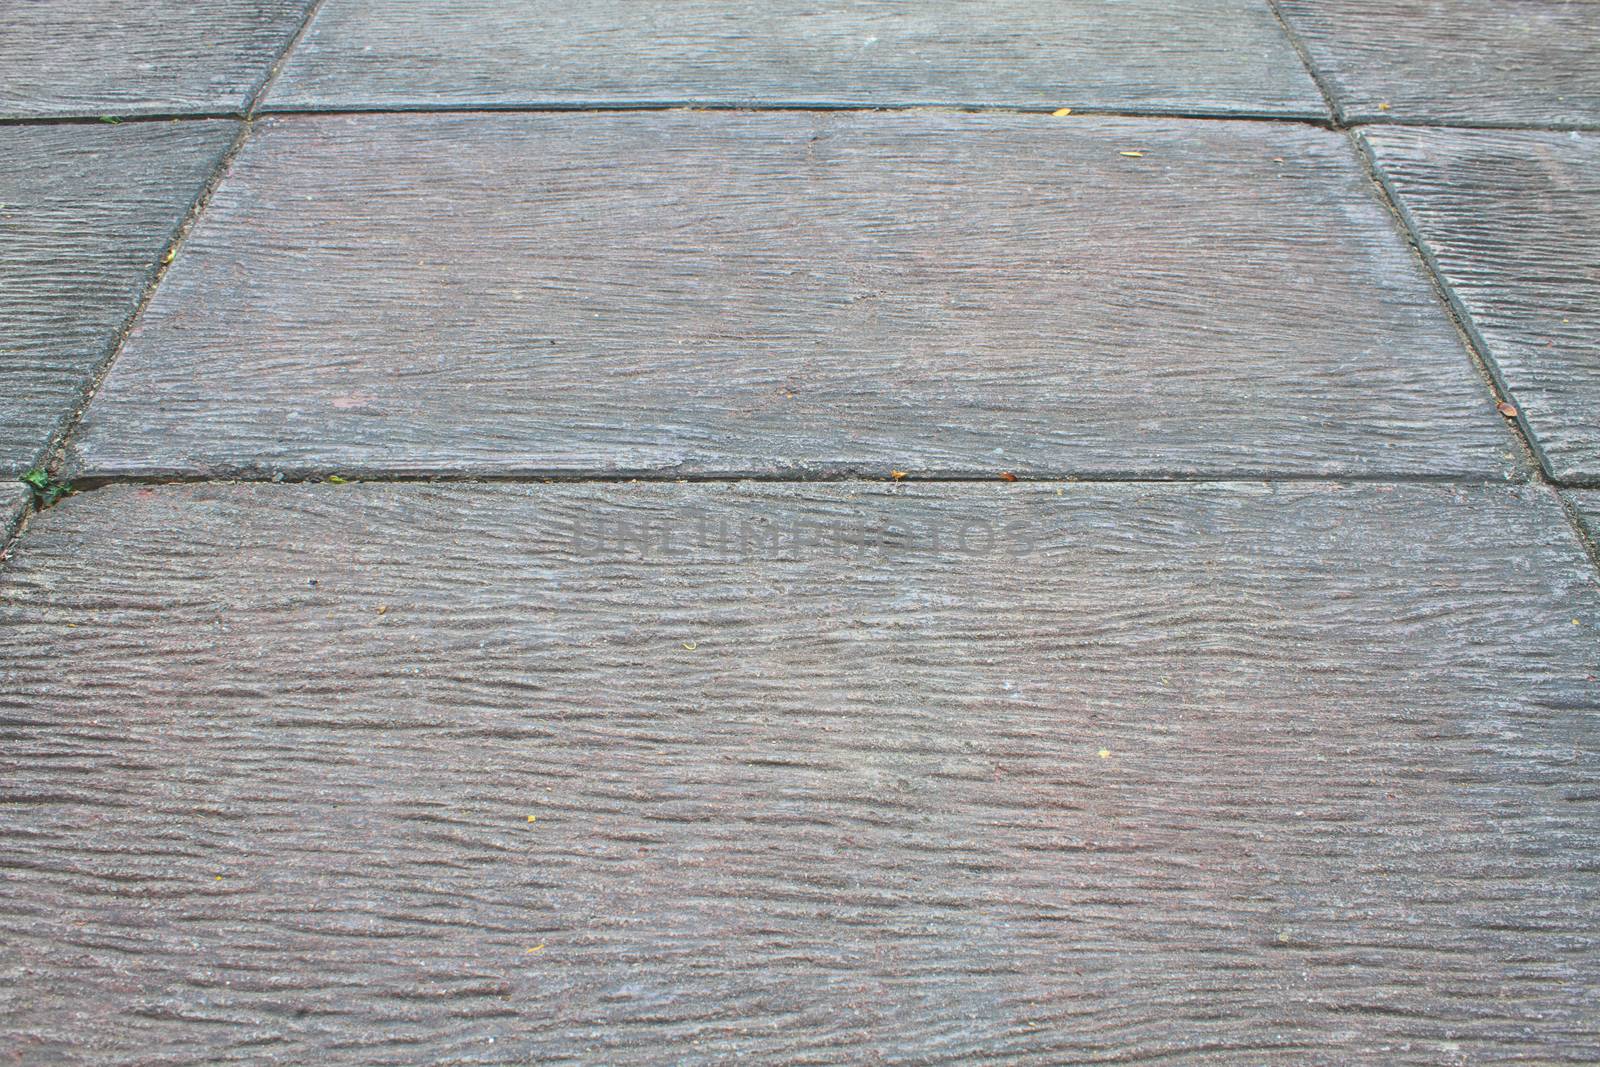 floor tiles background, background of paving stone bricks on the floor 